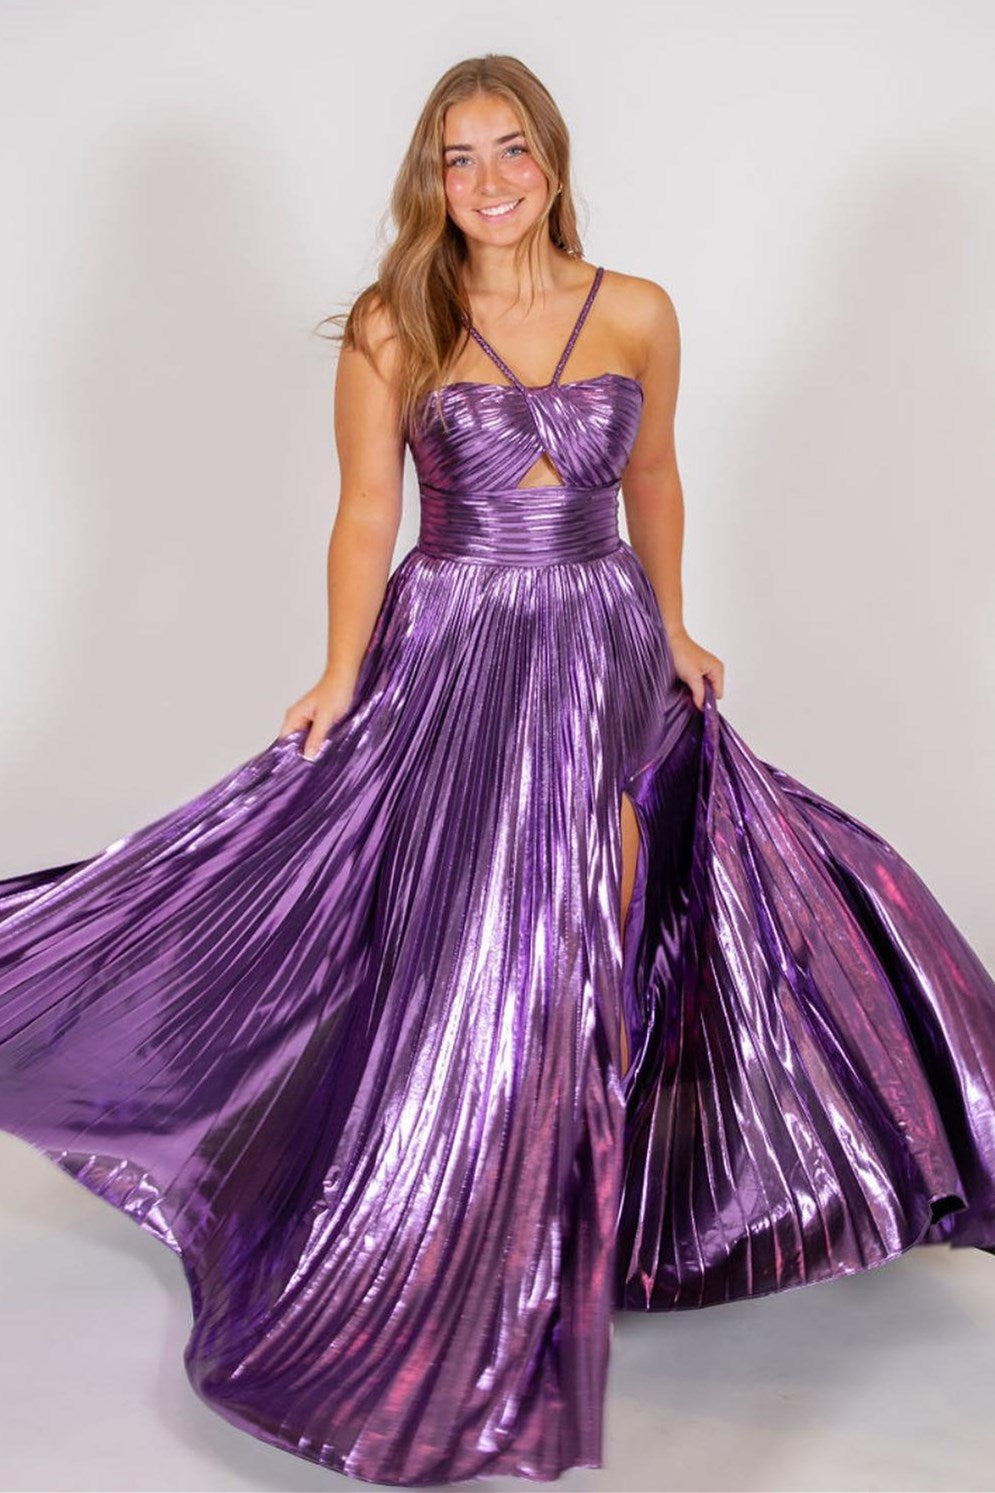 Camille La Vie Halter Pleated Metallic Prom Ball Gown Long Dress - Blue -  Size 0 | eBay